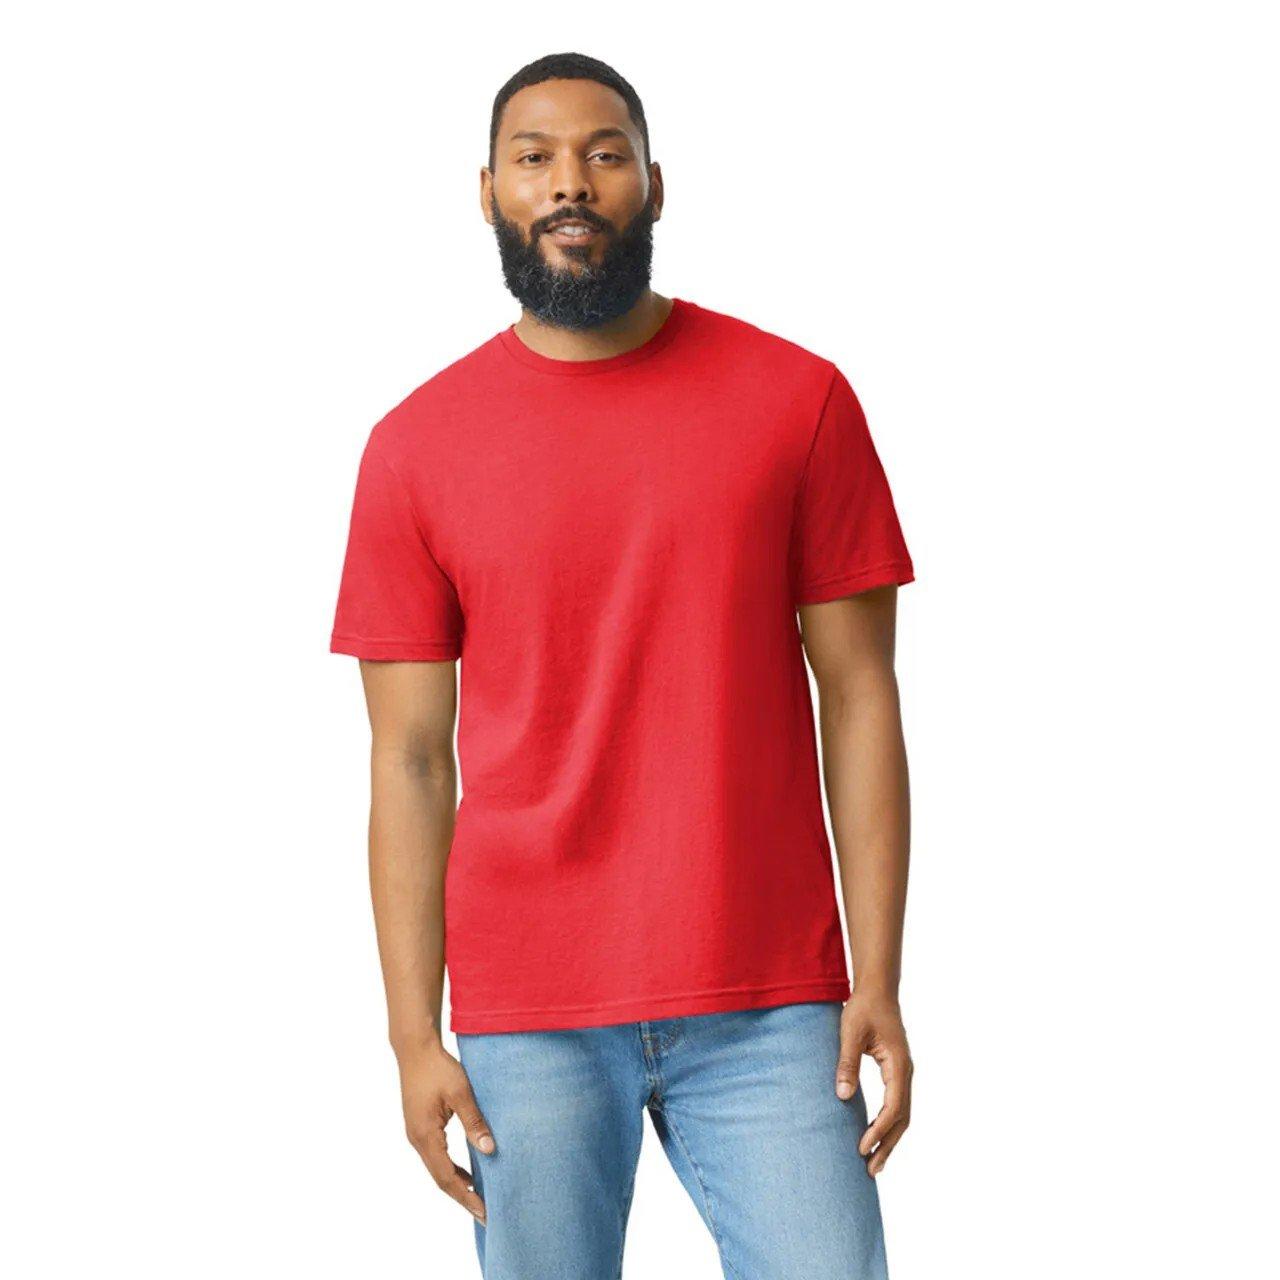 Tshirt Damen Rot Bunt XL von Gildan